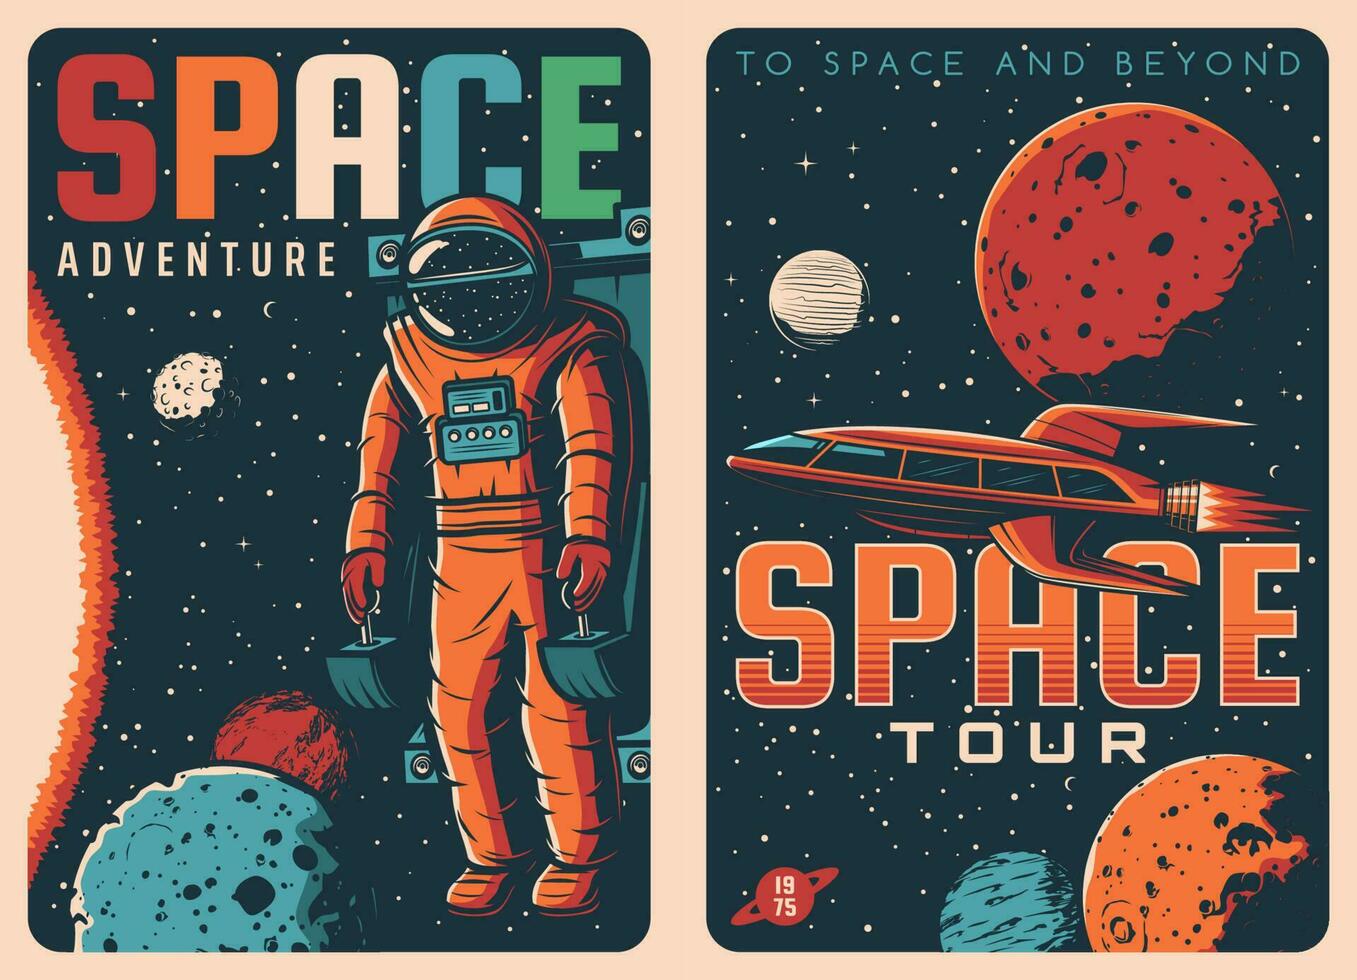 ruimte reizen tours retro affiches, heelal avontuur vector